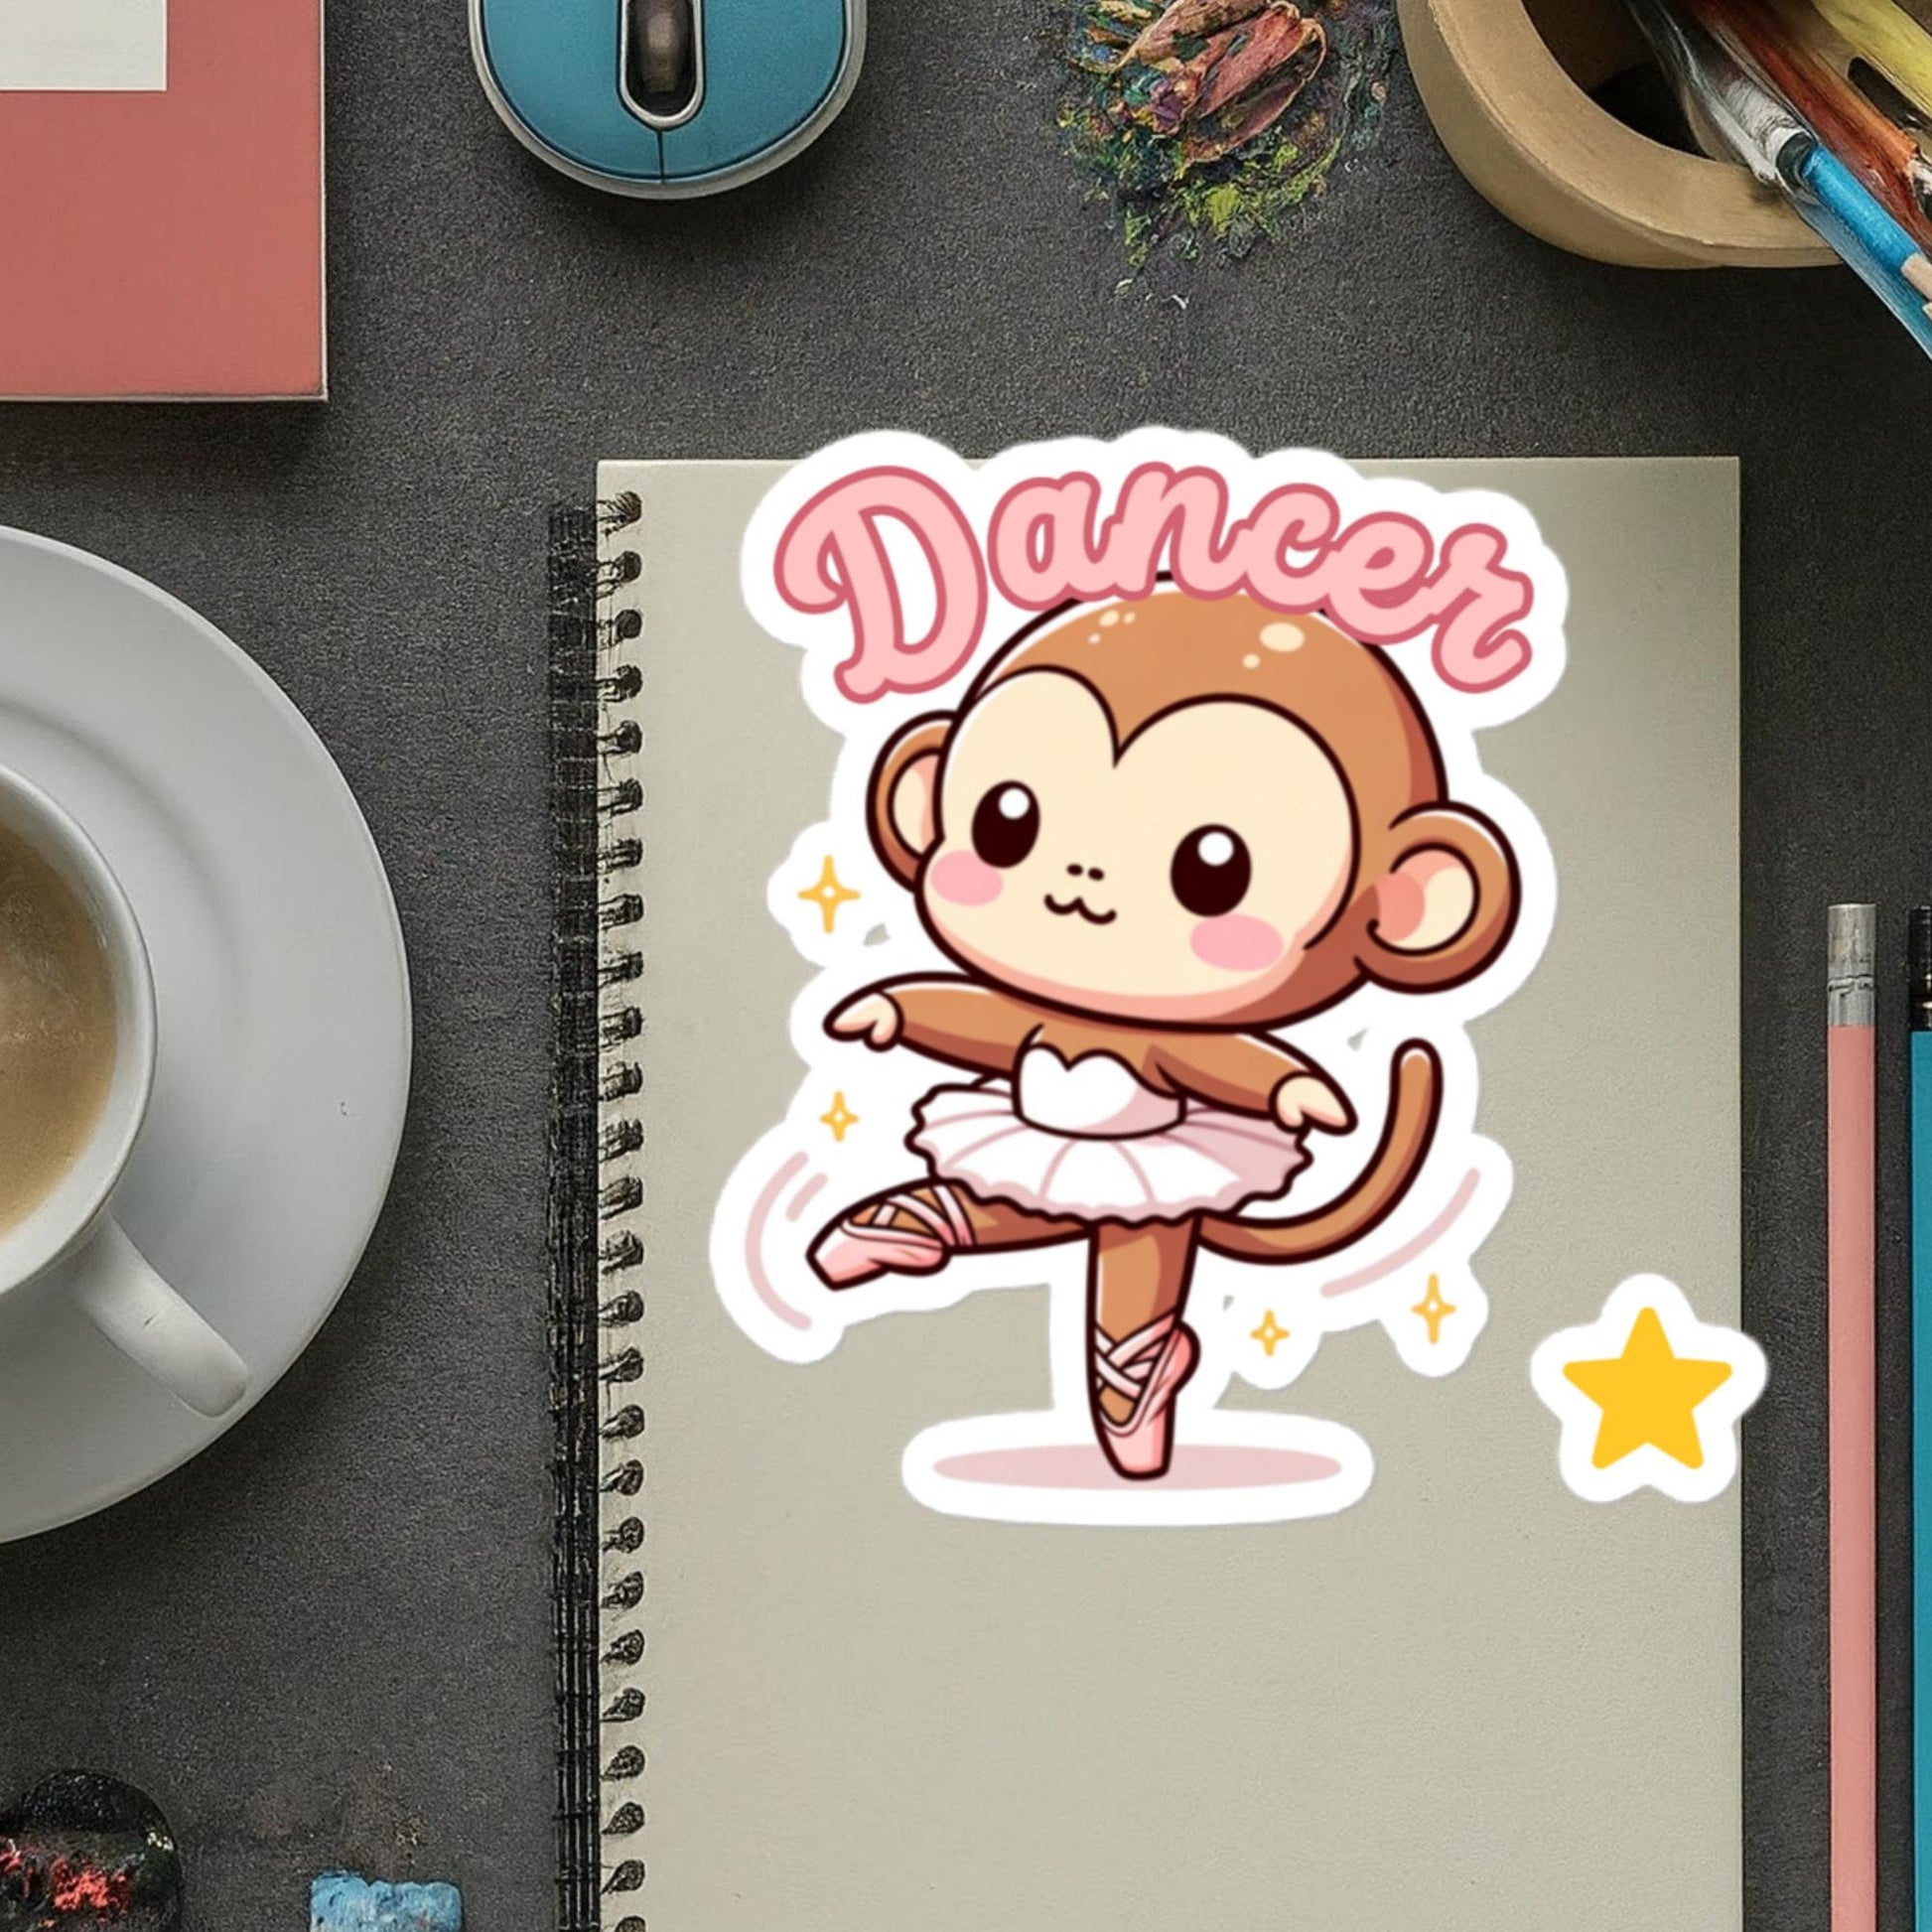 Dancer Monkey sticker Bubble-free stickers ballet dancer gifts teacher gifts